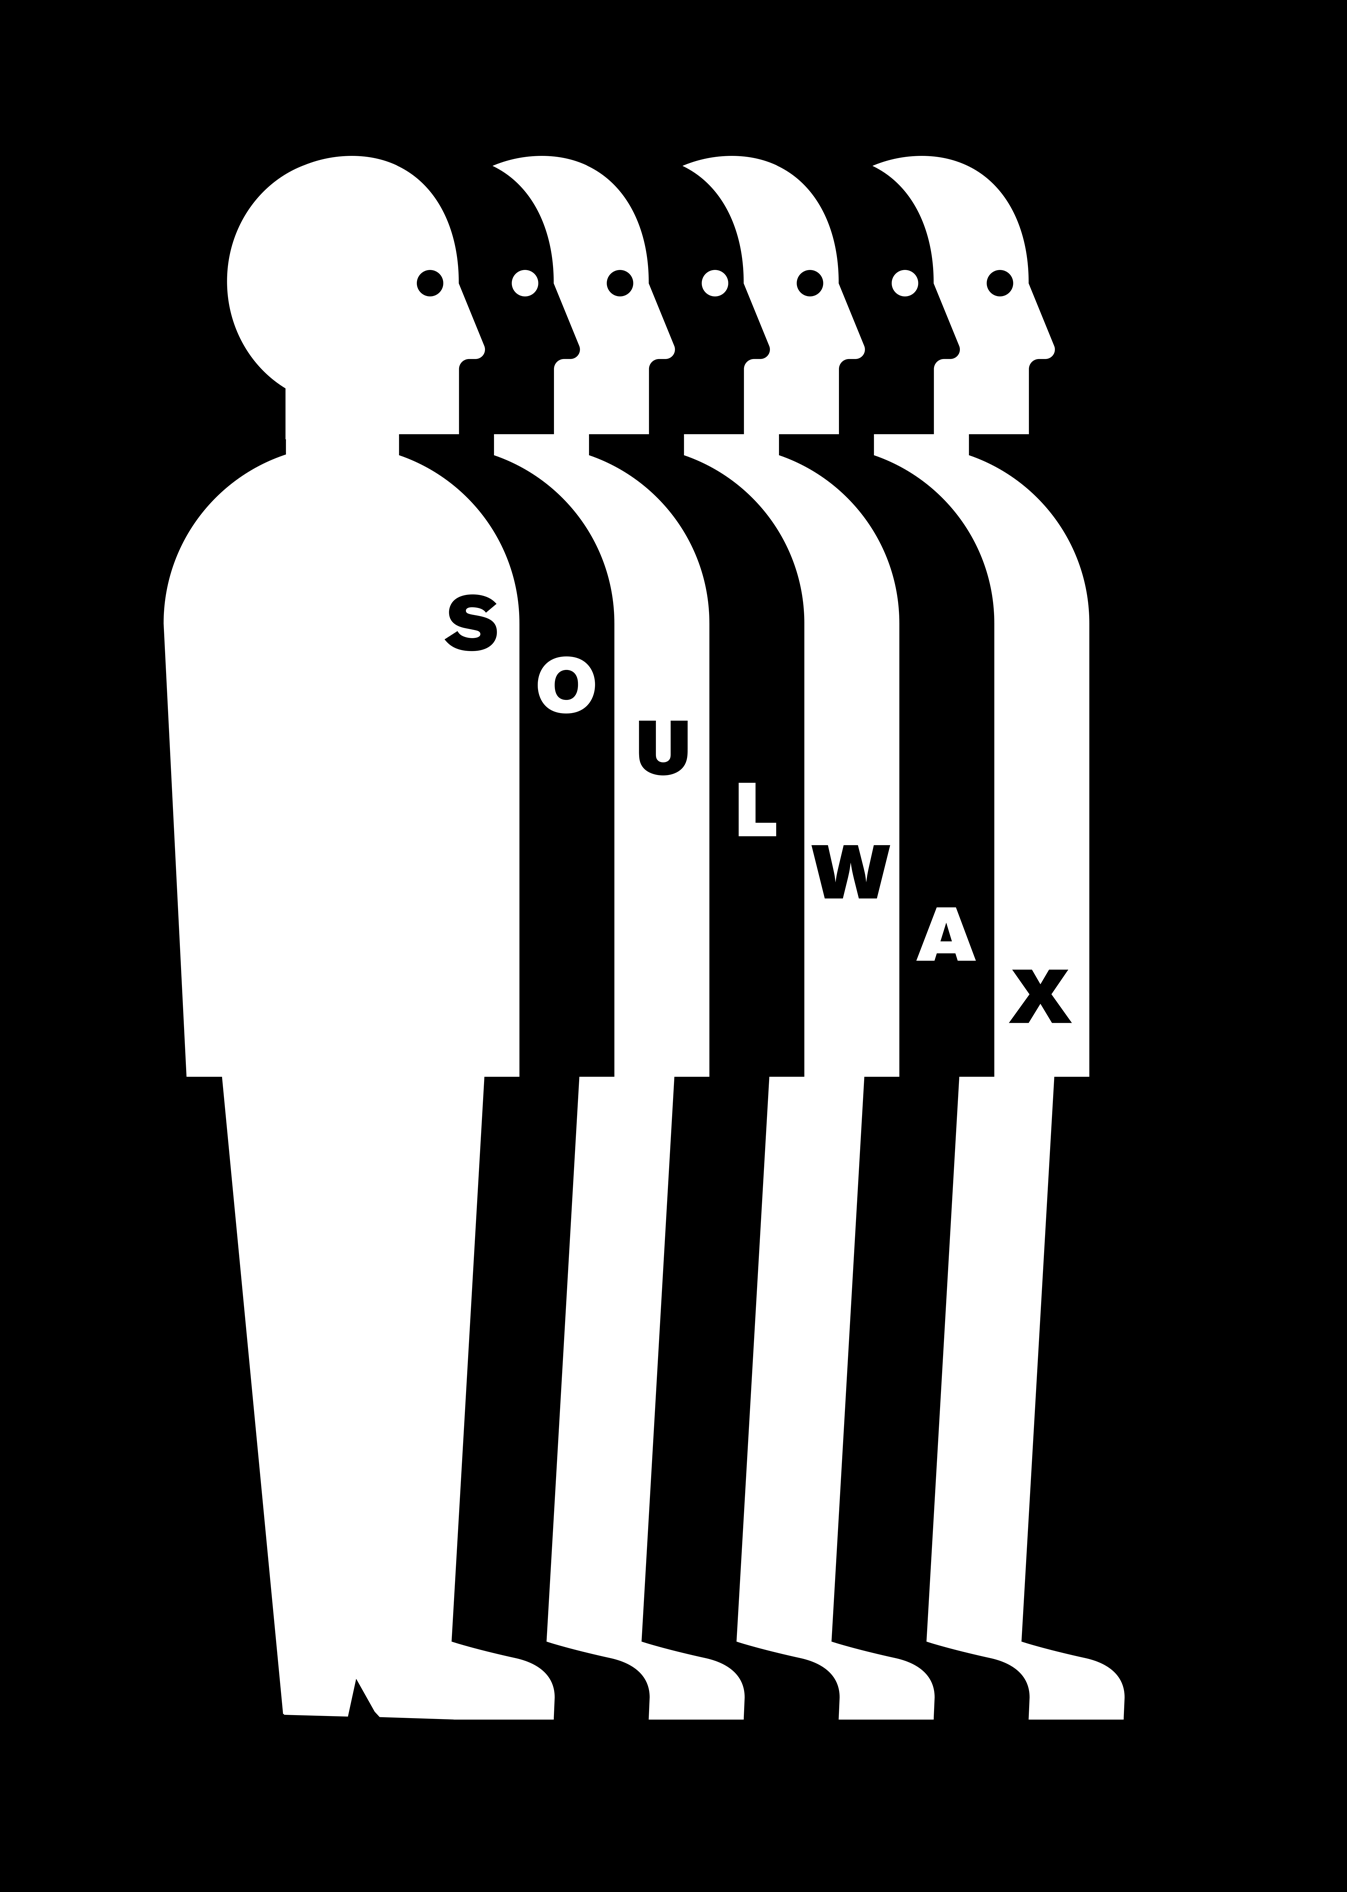 Soulwax UK logo